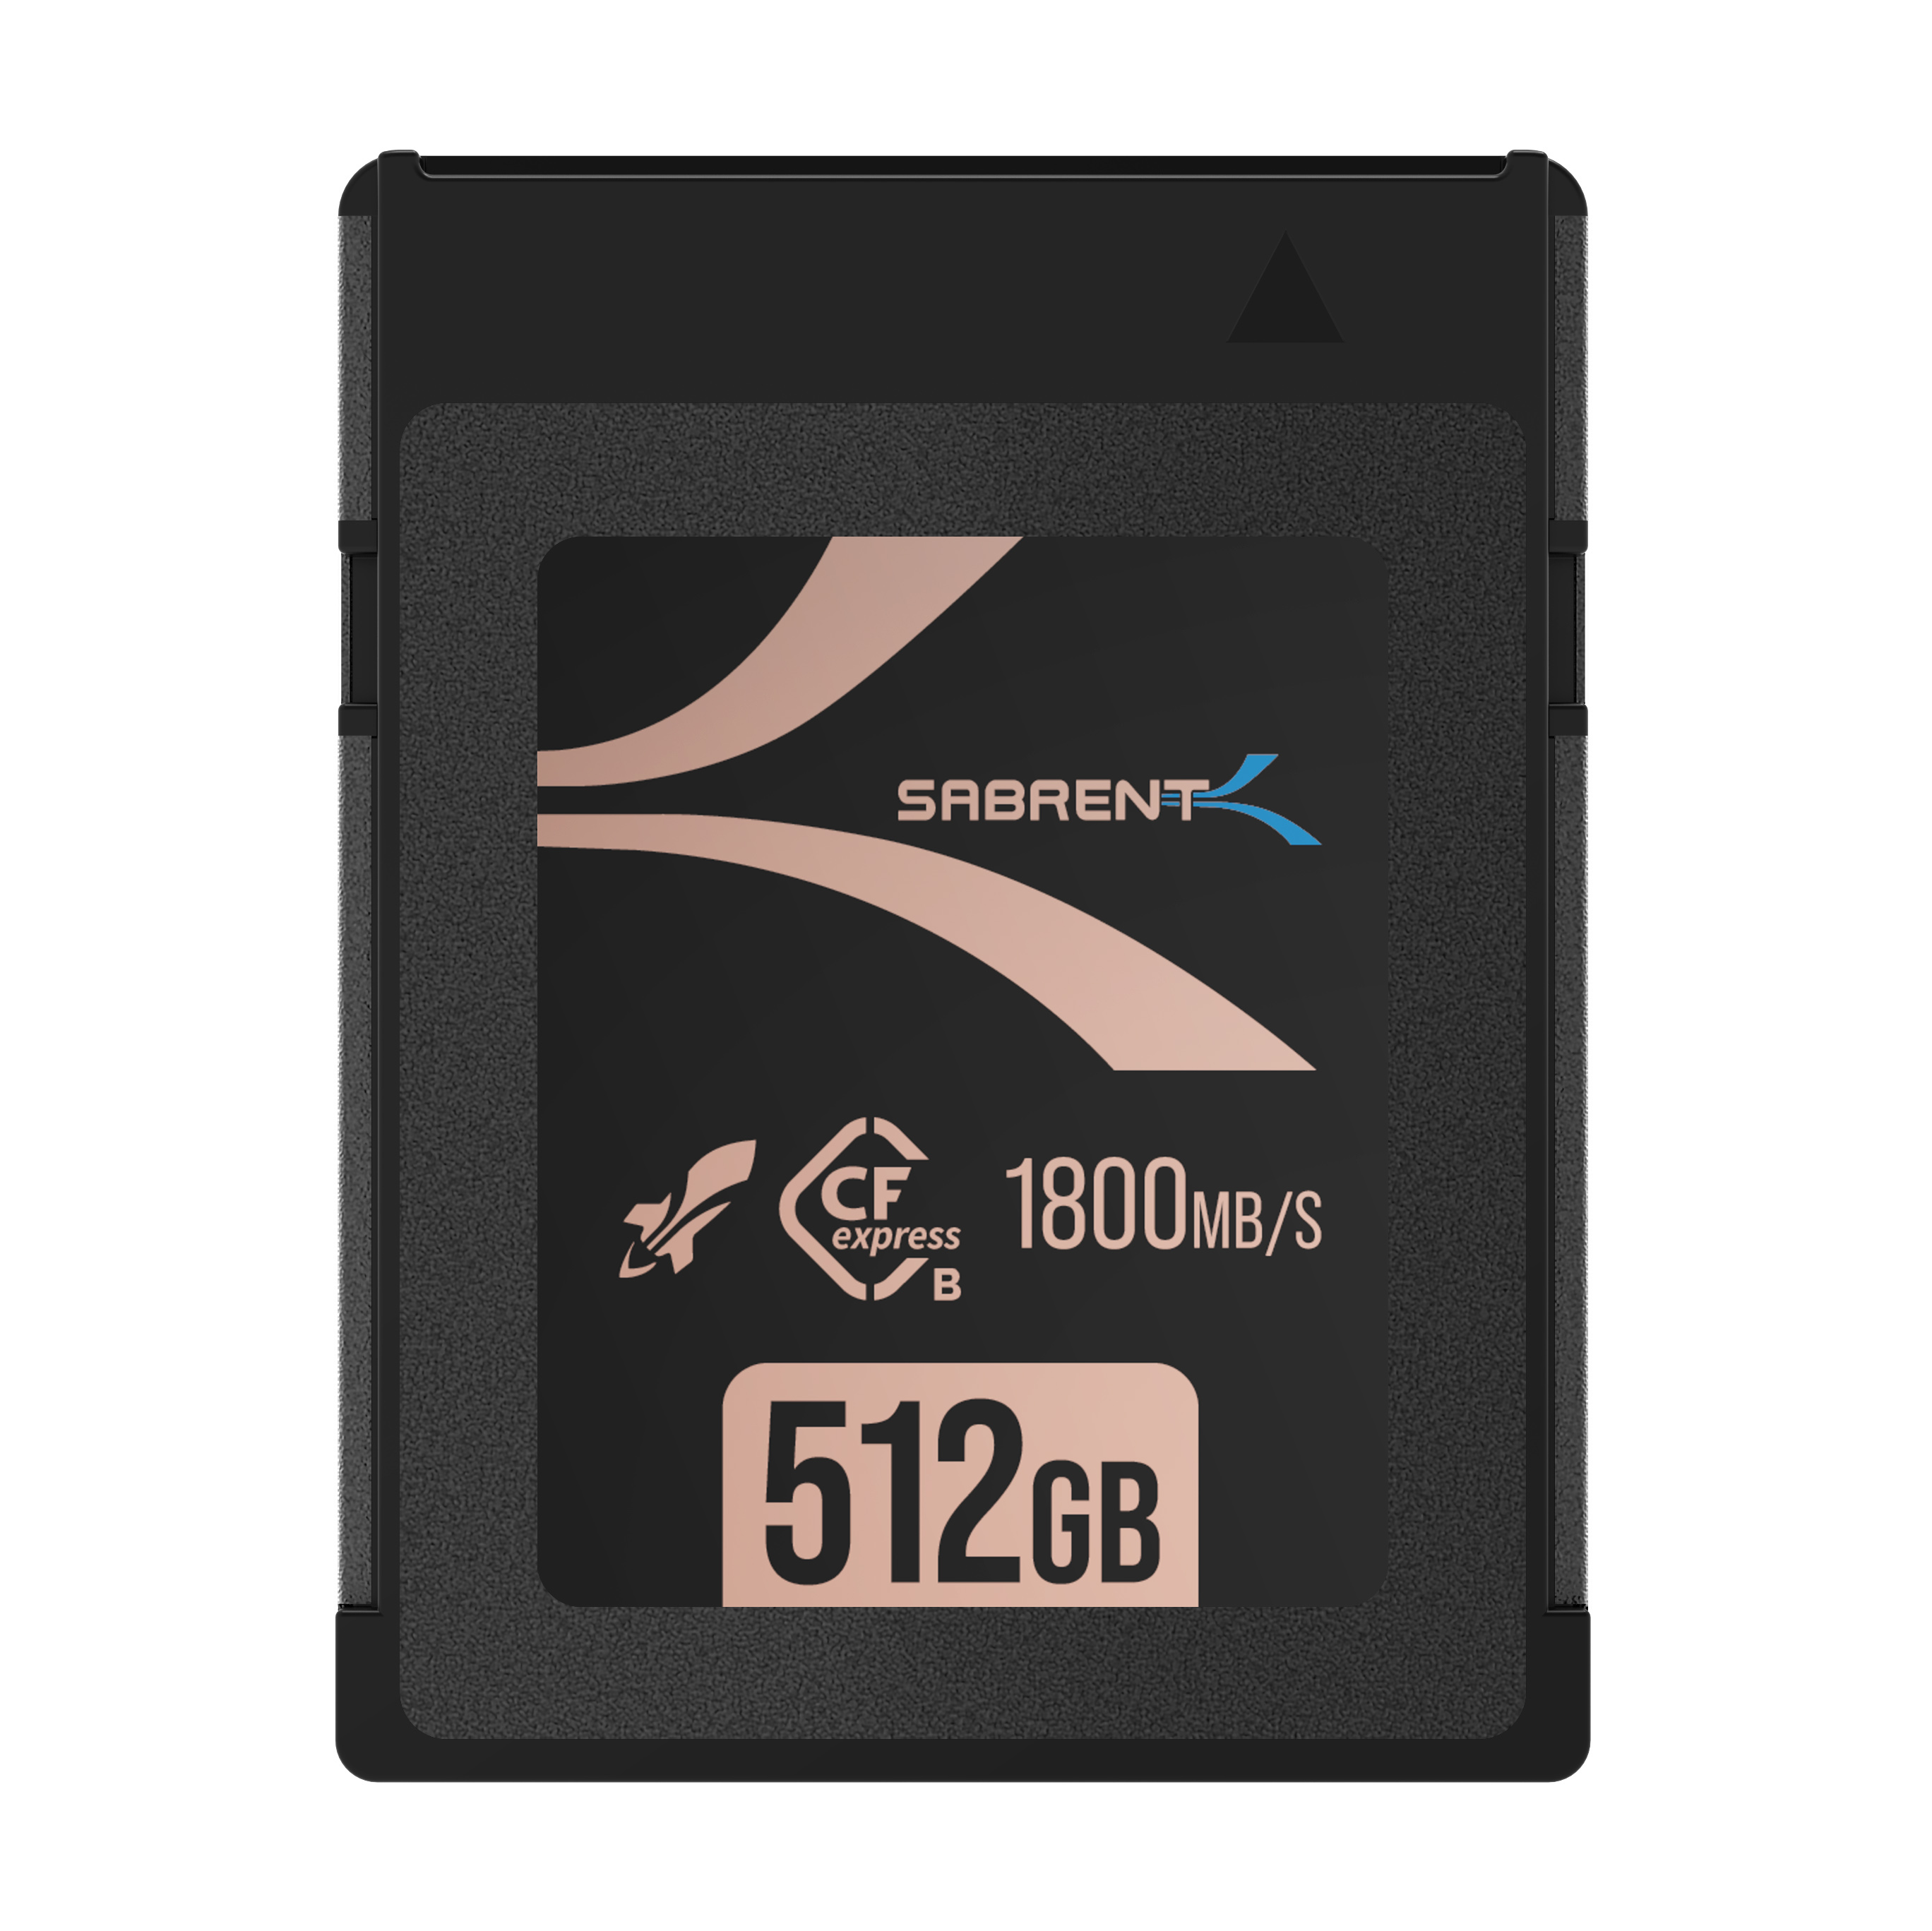 SABRENT 512GB CFexpress 1800 CFexpress-Karte, CFexpress B, 512 Typ MB/s GB